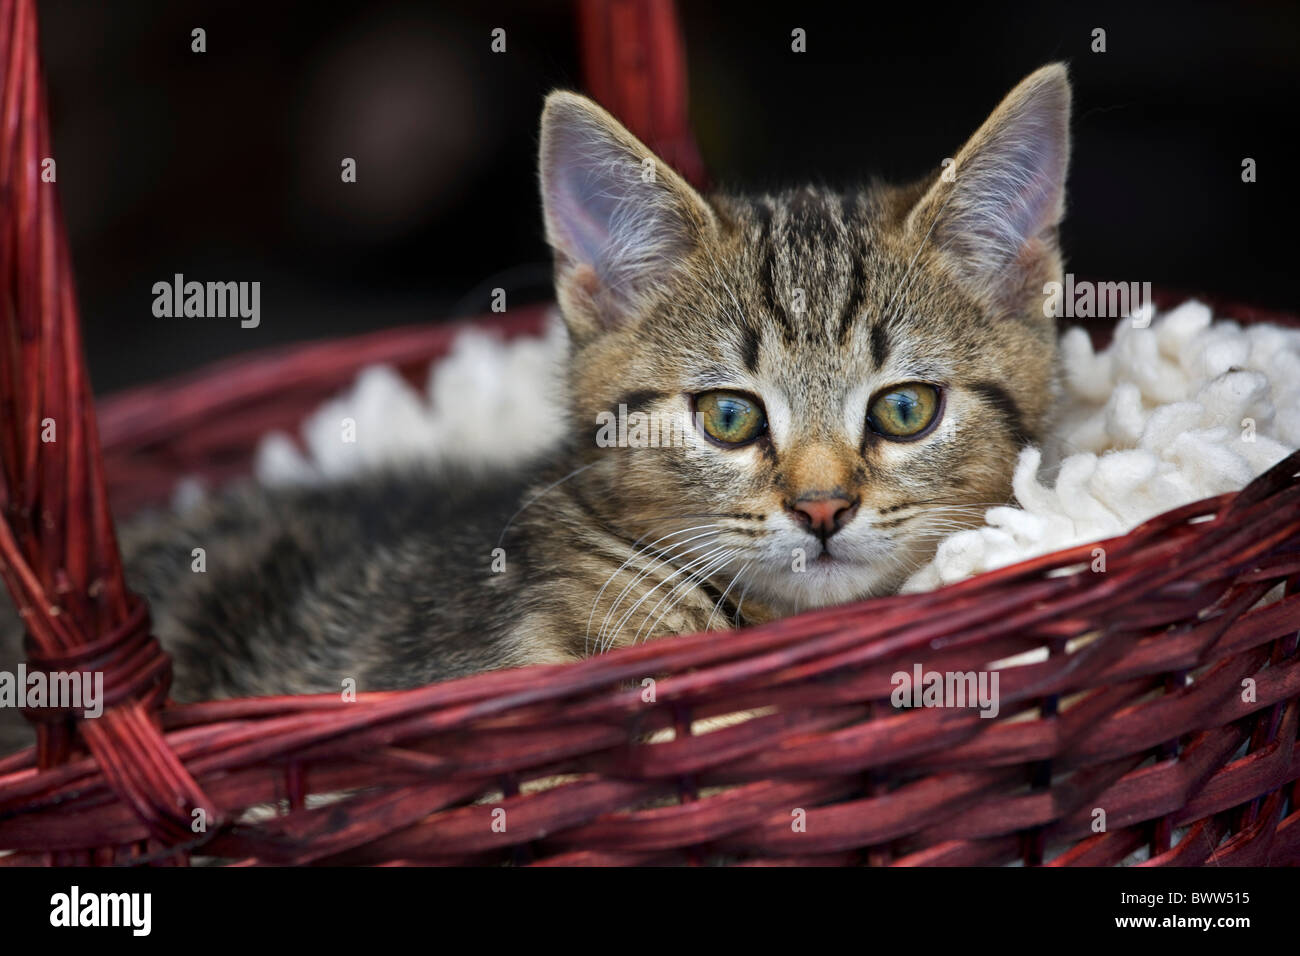 Domestic cat (Felis catus) resting in red basket Stock Photo